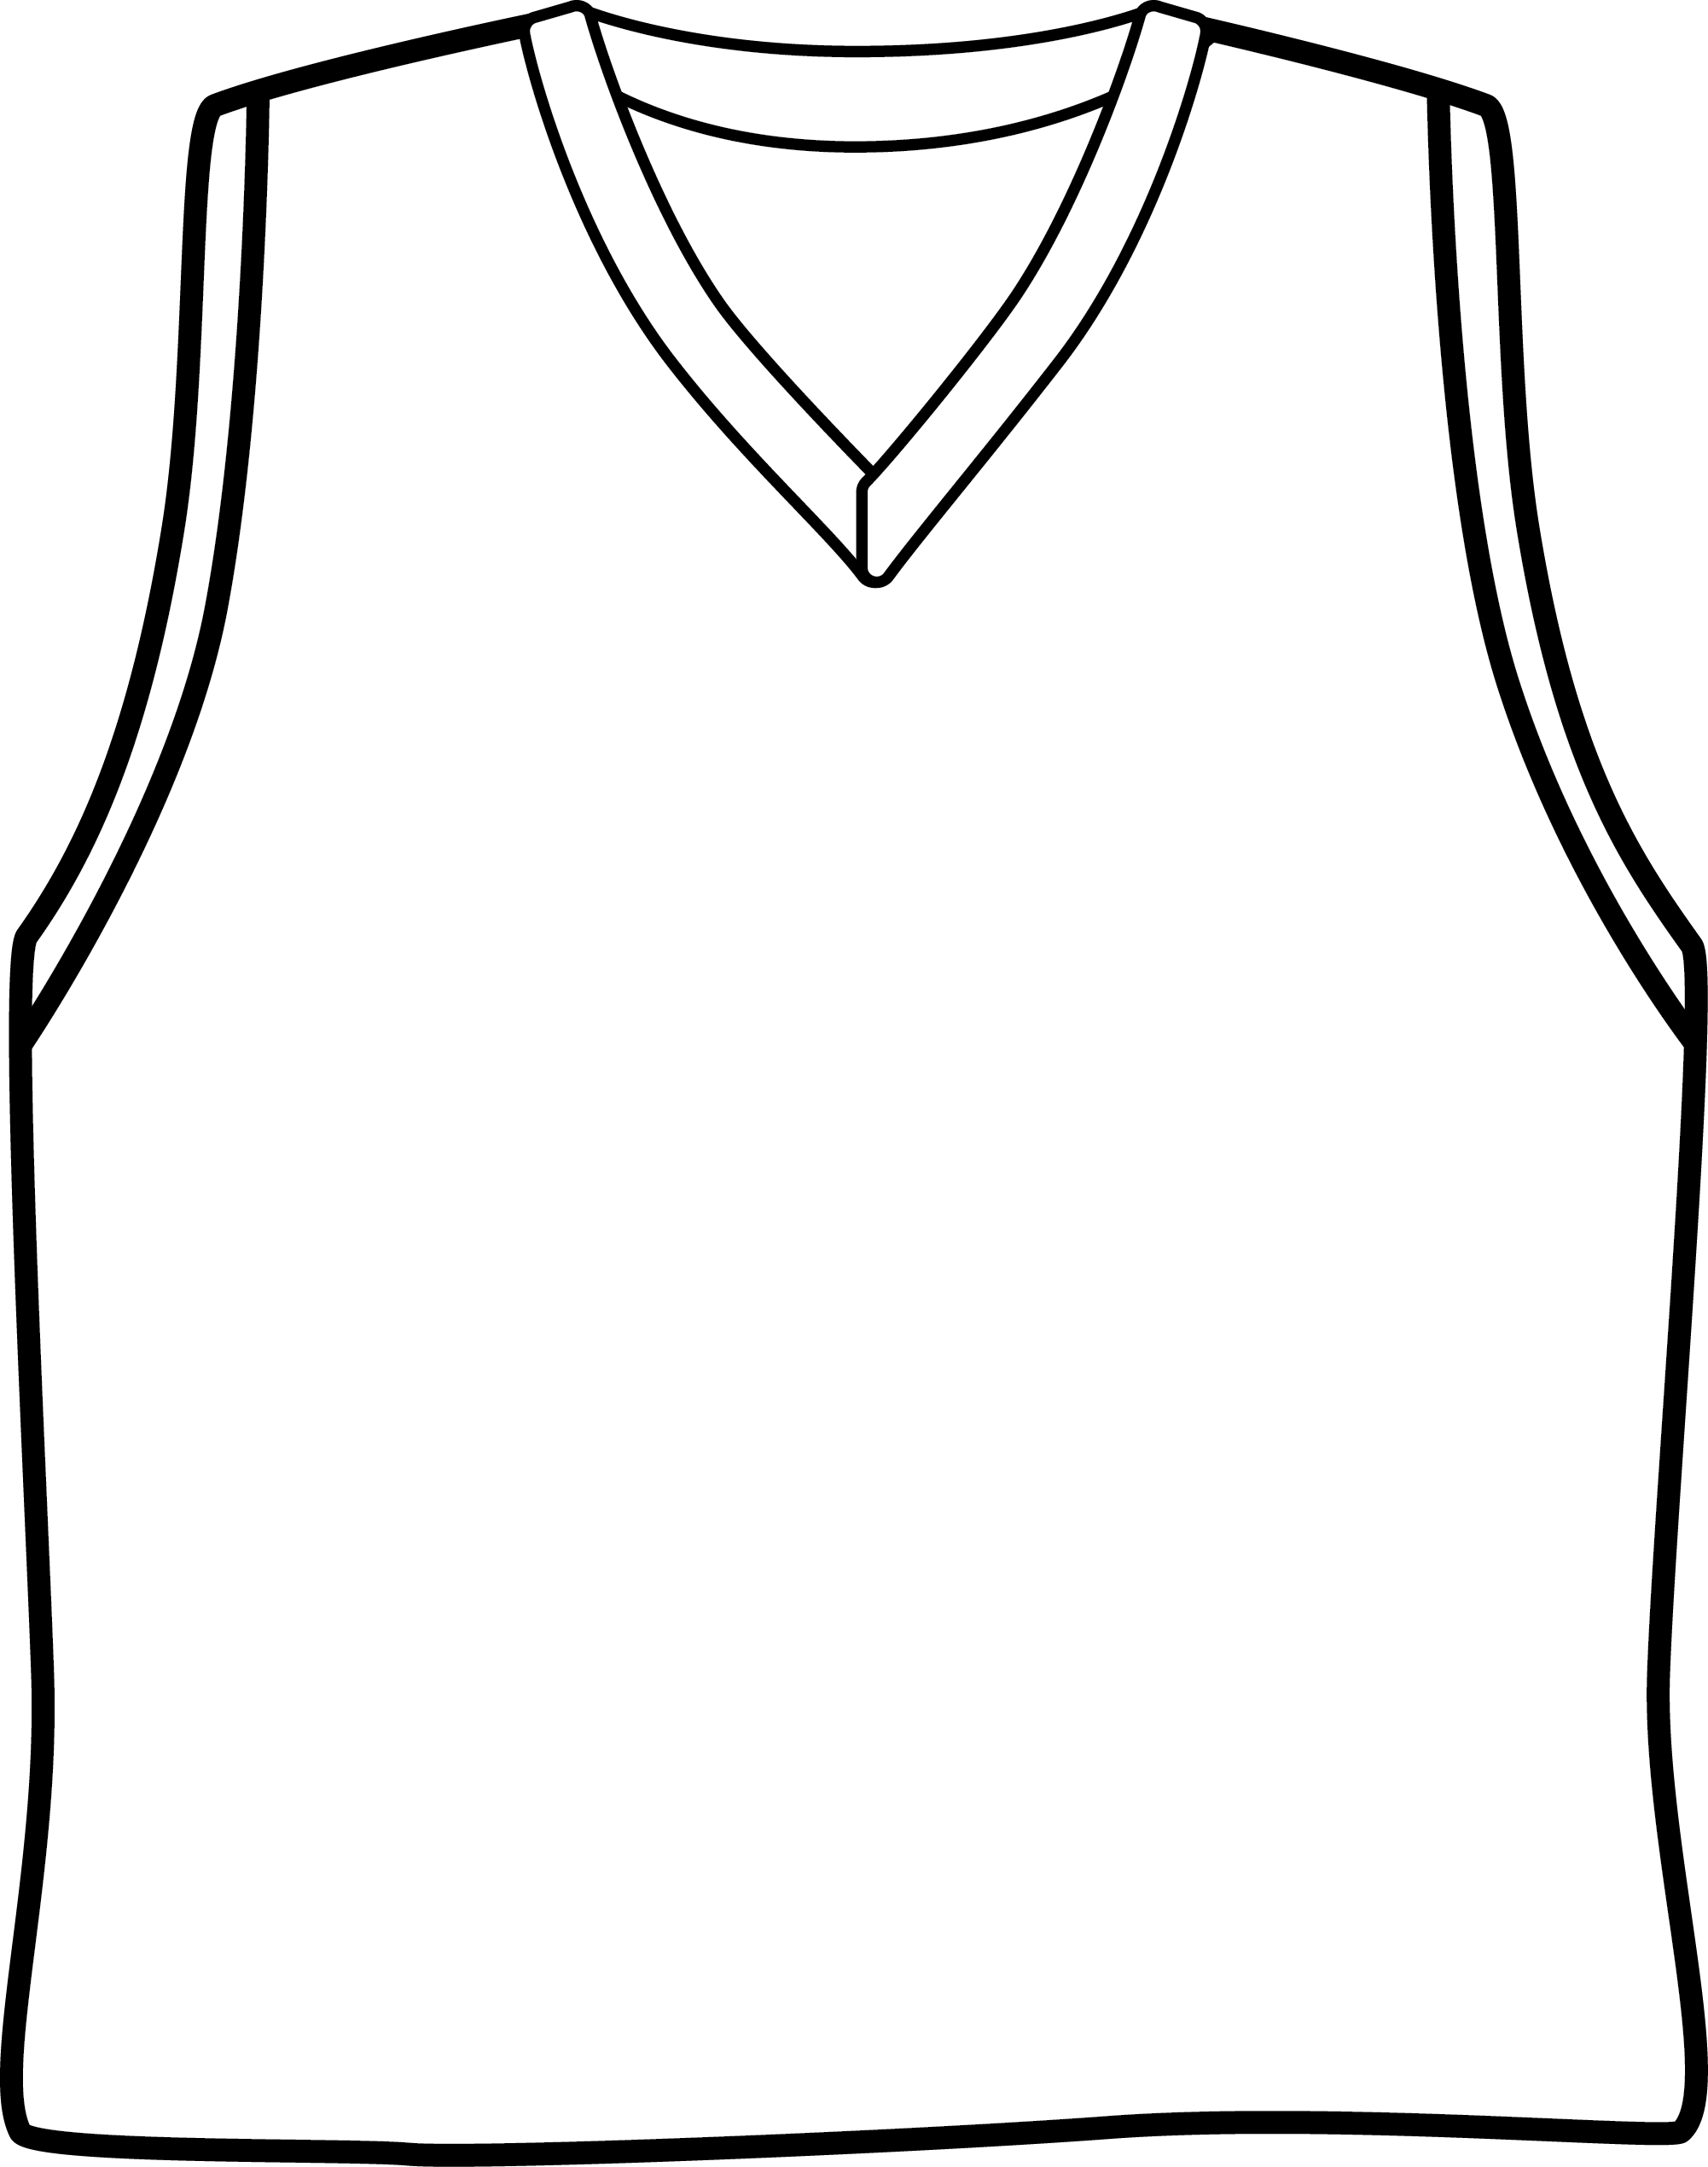 Black basketball jersey clipart 